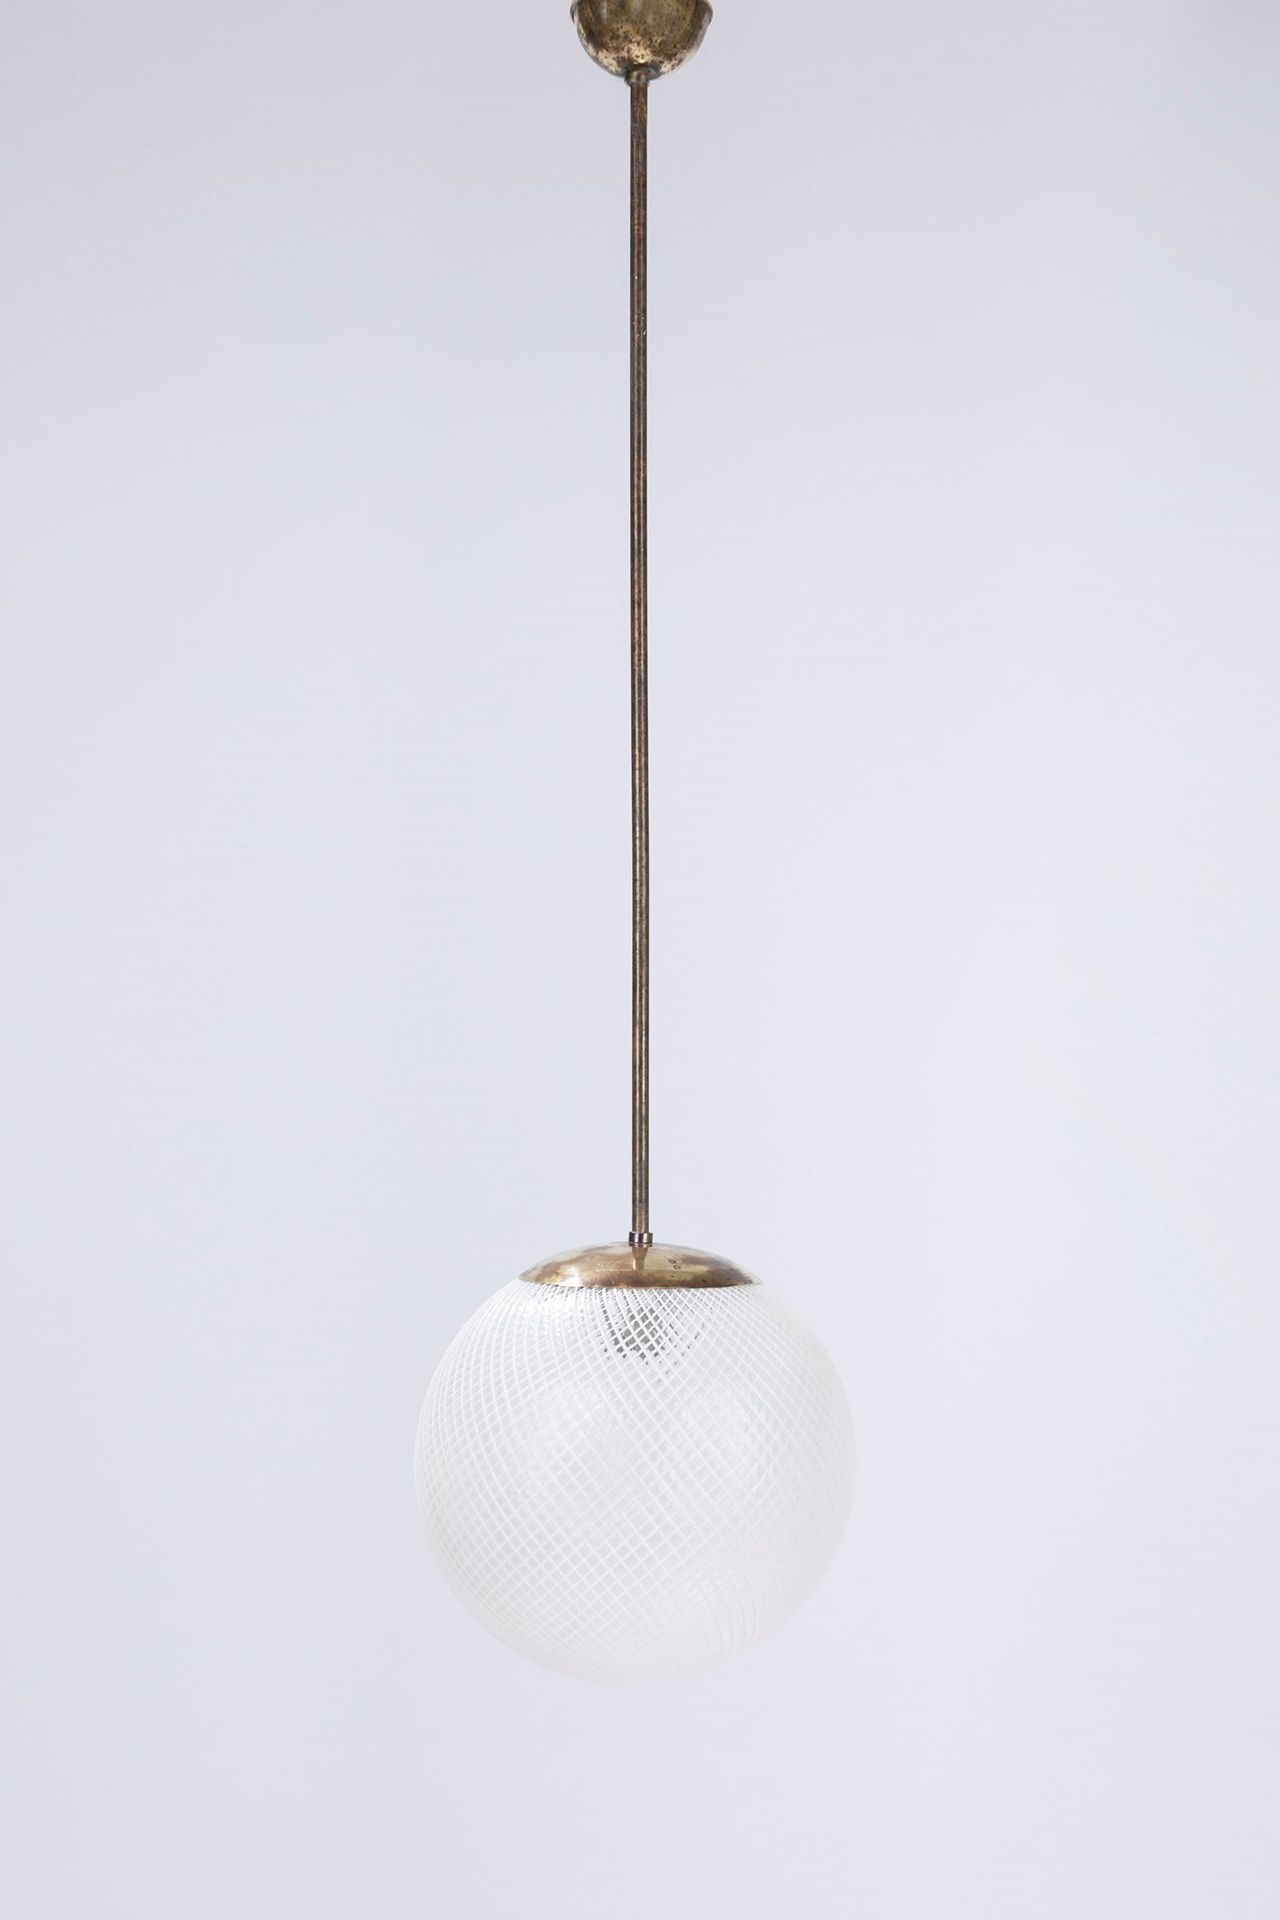 CARLO SCARPA Hanging lamp, 1930 ca.

Diam 30
reticello glass and metal structure&hellip;